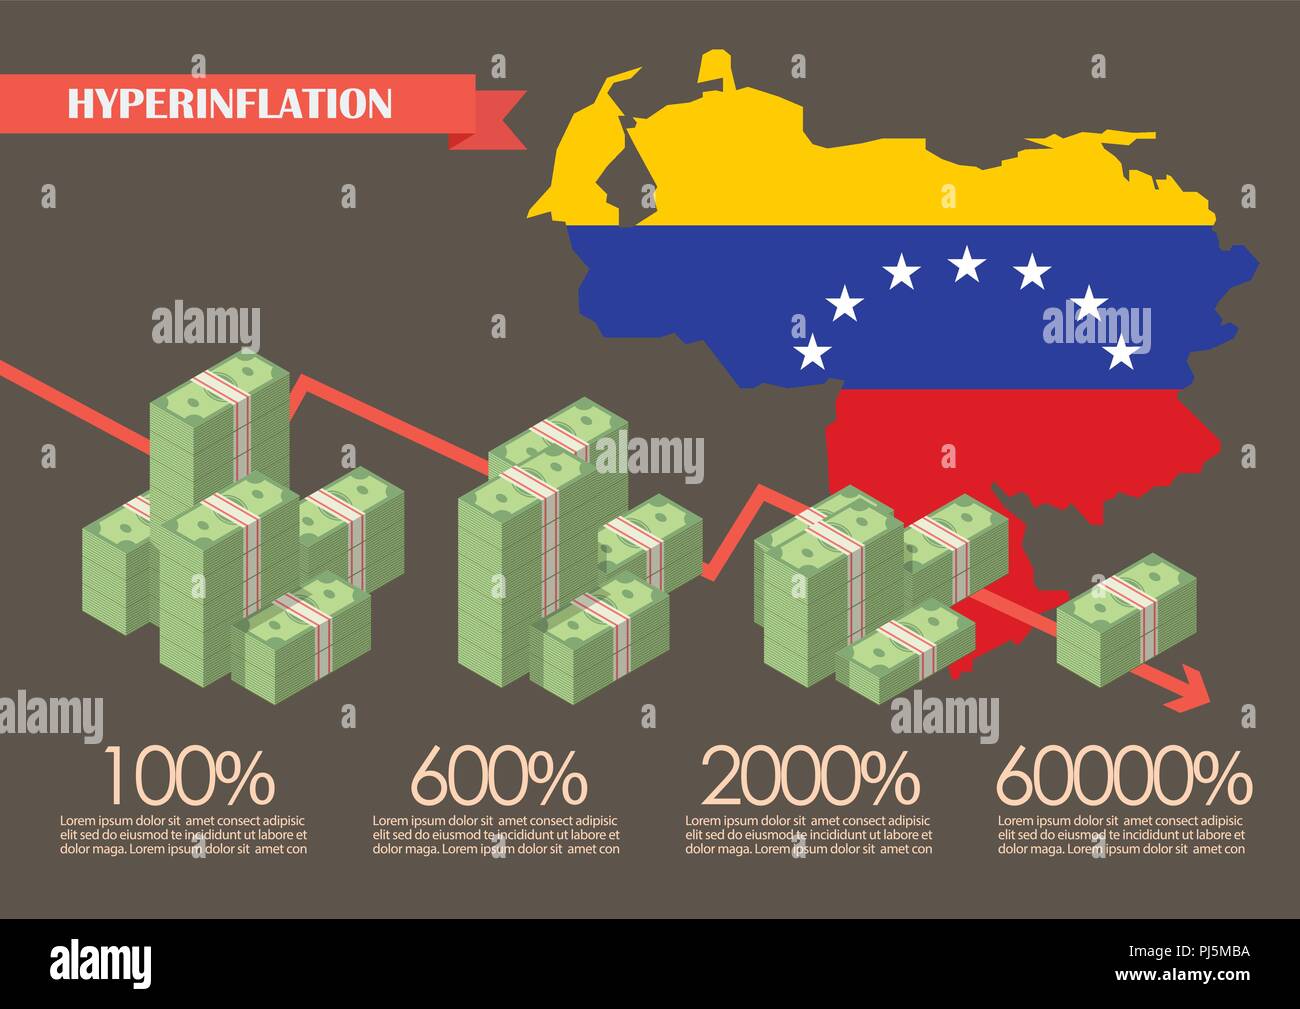 Hyperinflation in venezuela concept infographic. Economy vector illustration concept Stock Vector